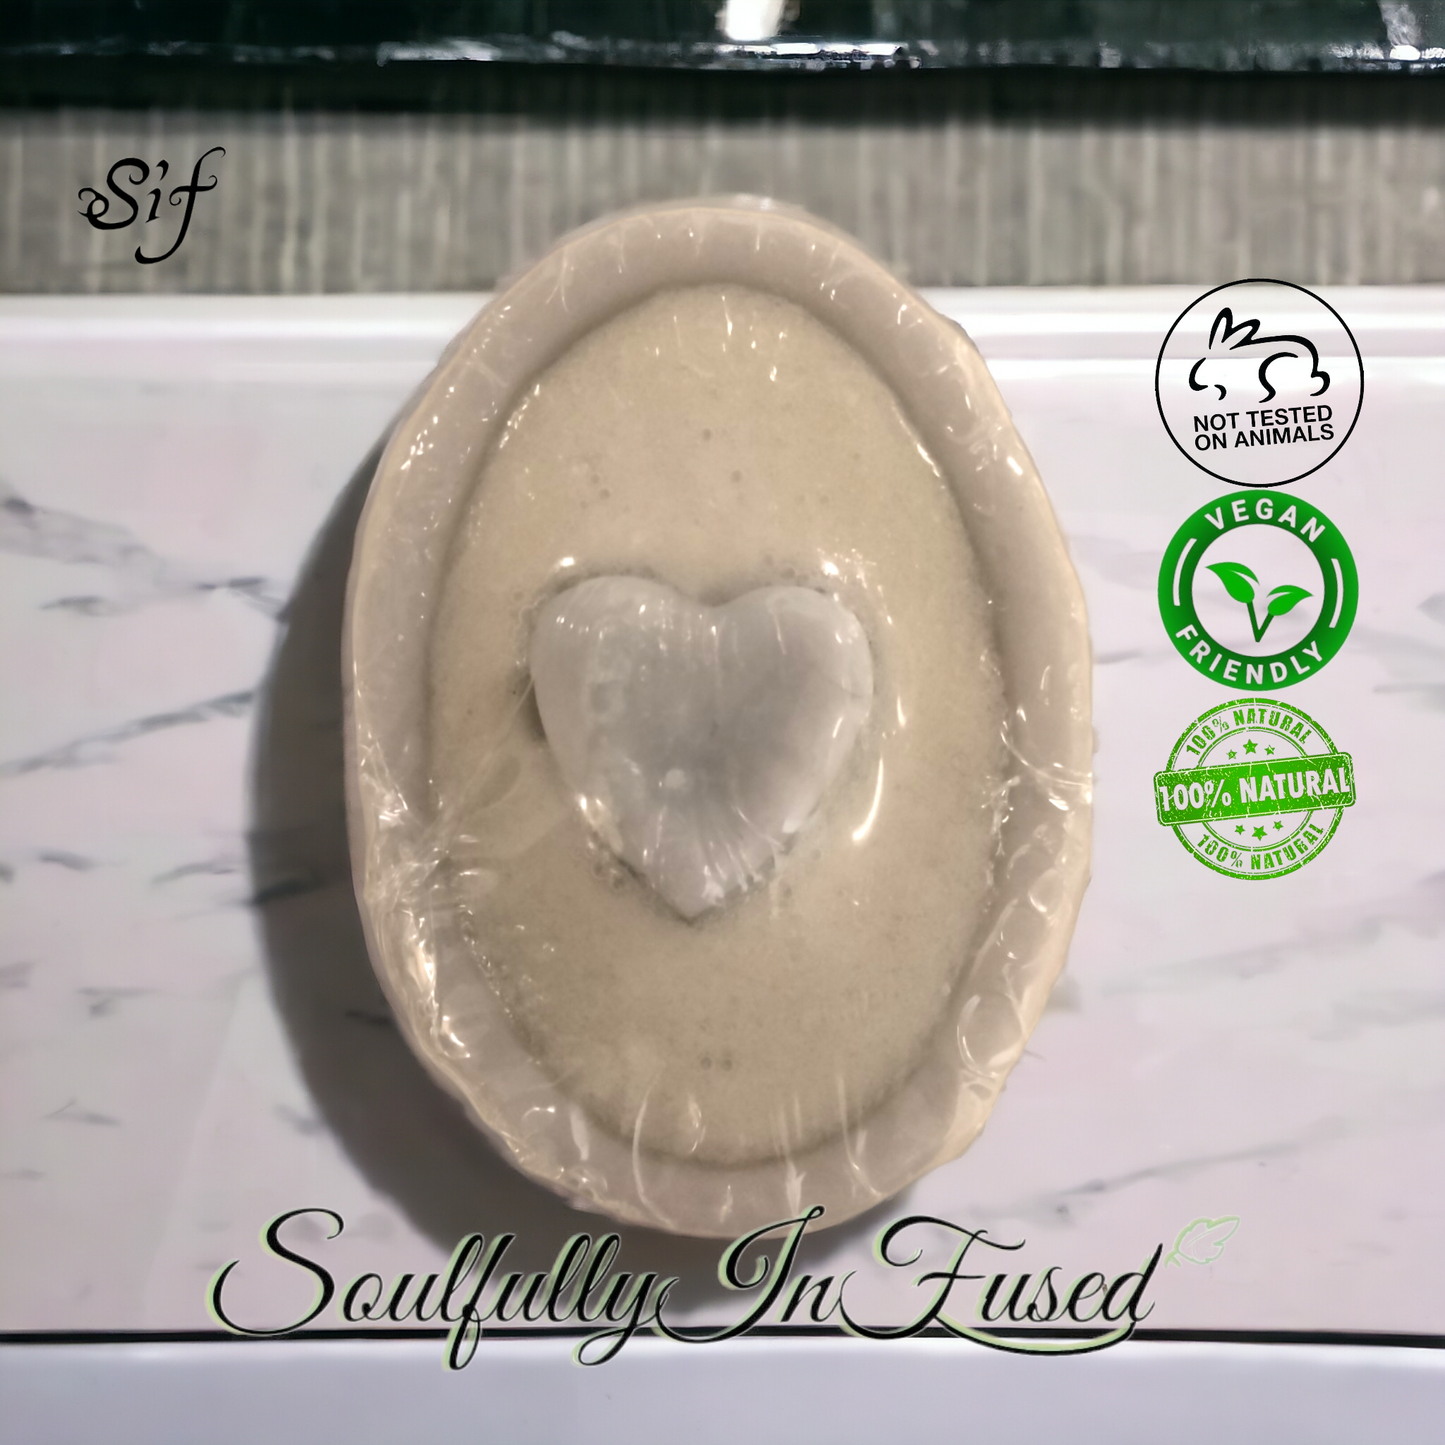 Sif's Heart Soap